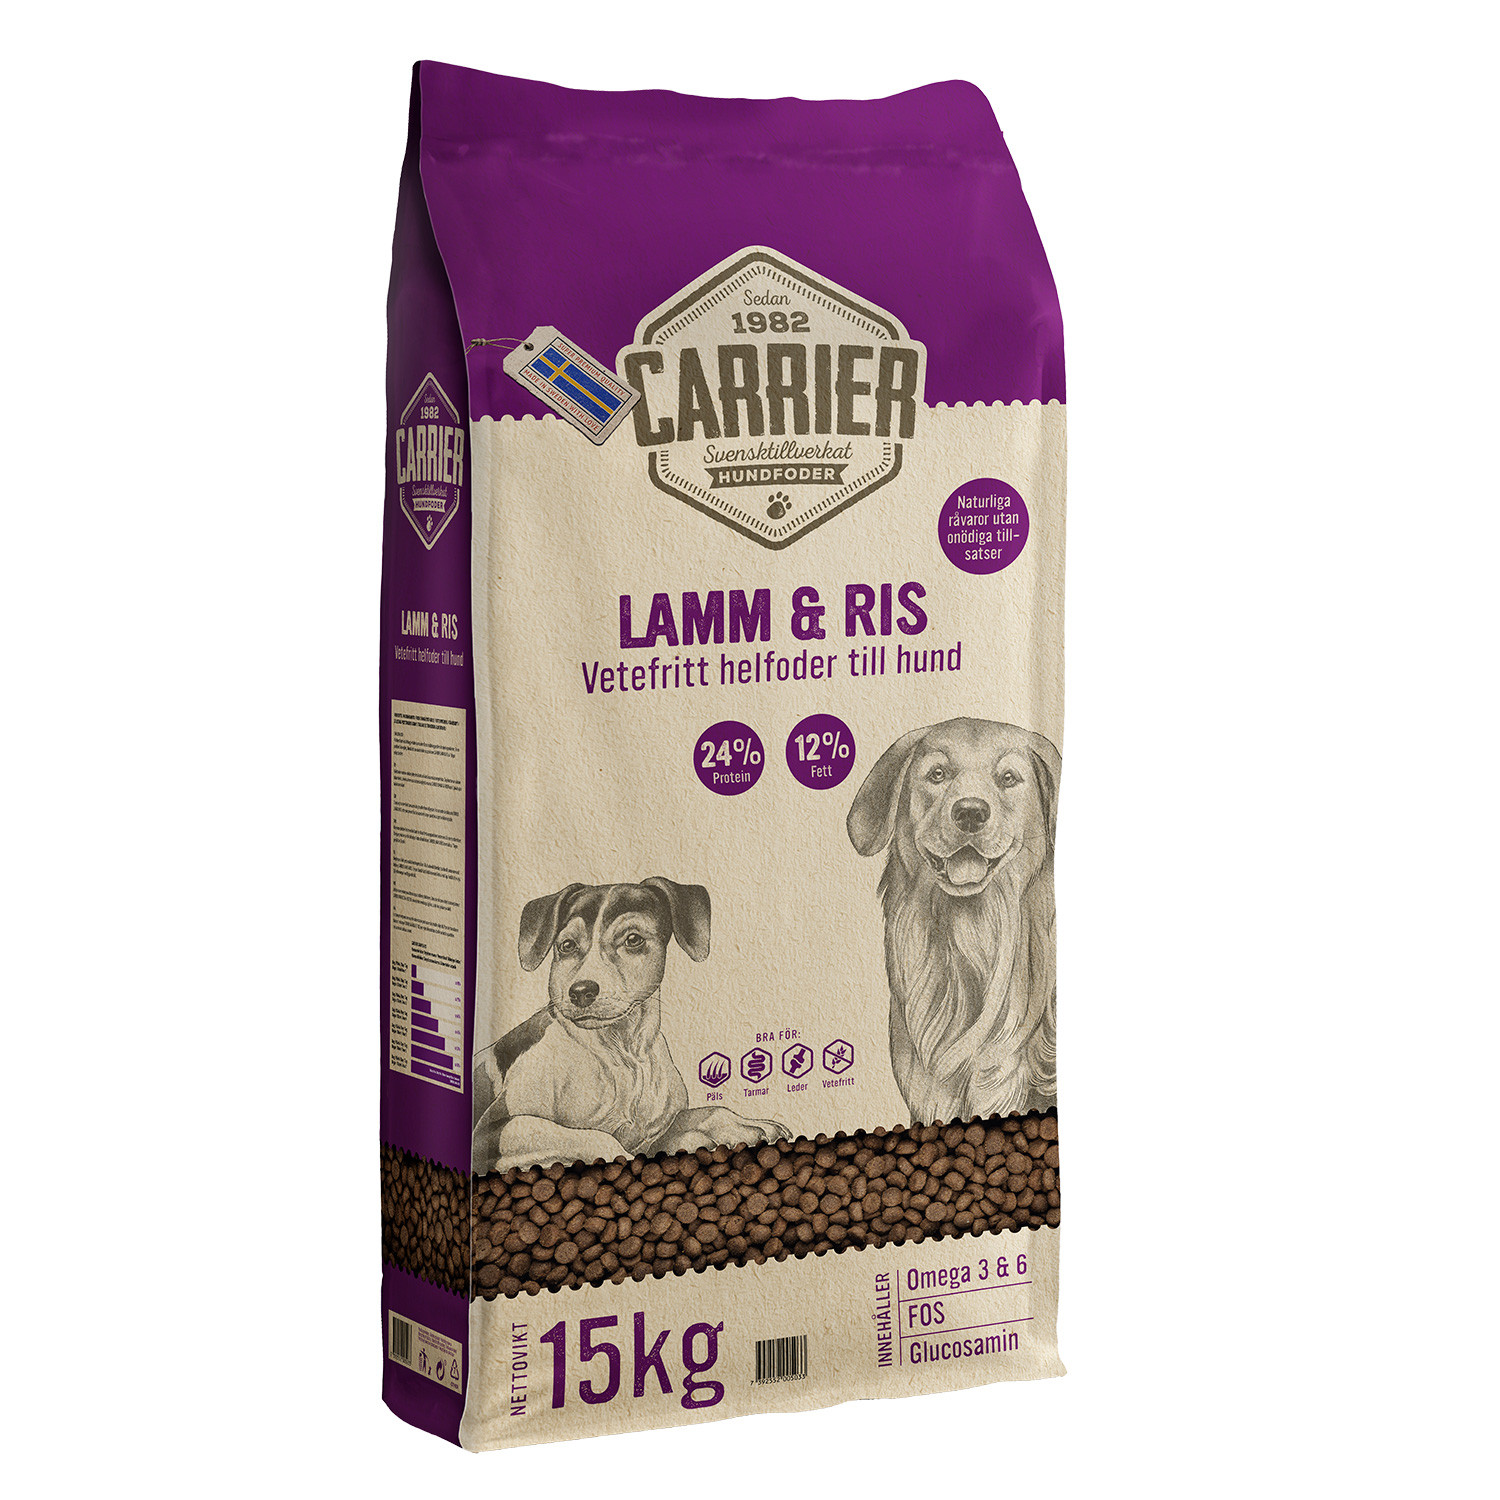 Carrier lamm ris 15kg